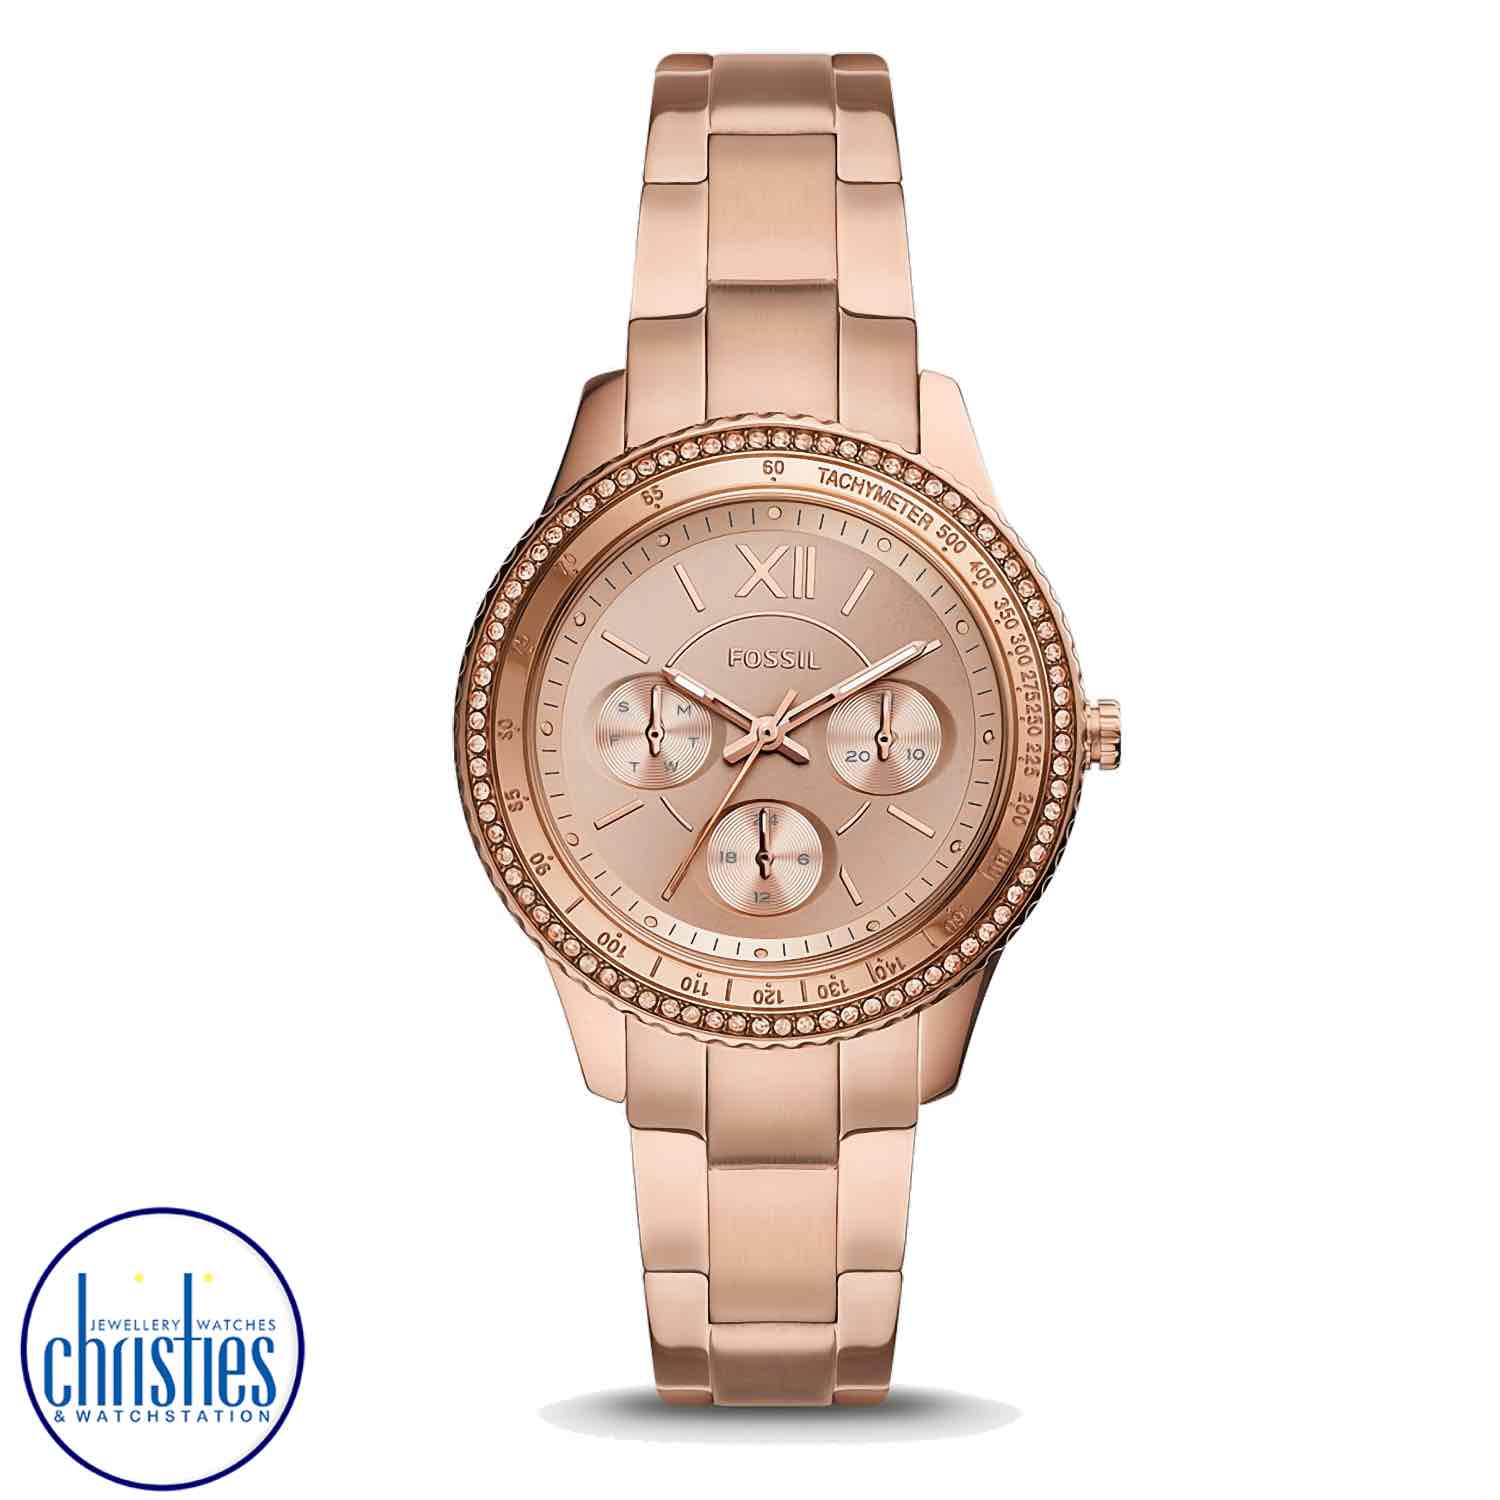 ES5106 Fossil Stella Sport Multifunction Rose Gold-Tone Watch. fossil smartwatch gen 6 $339.00